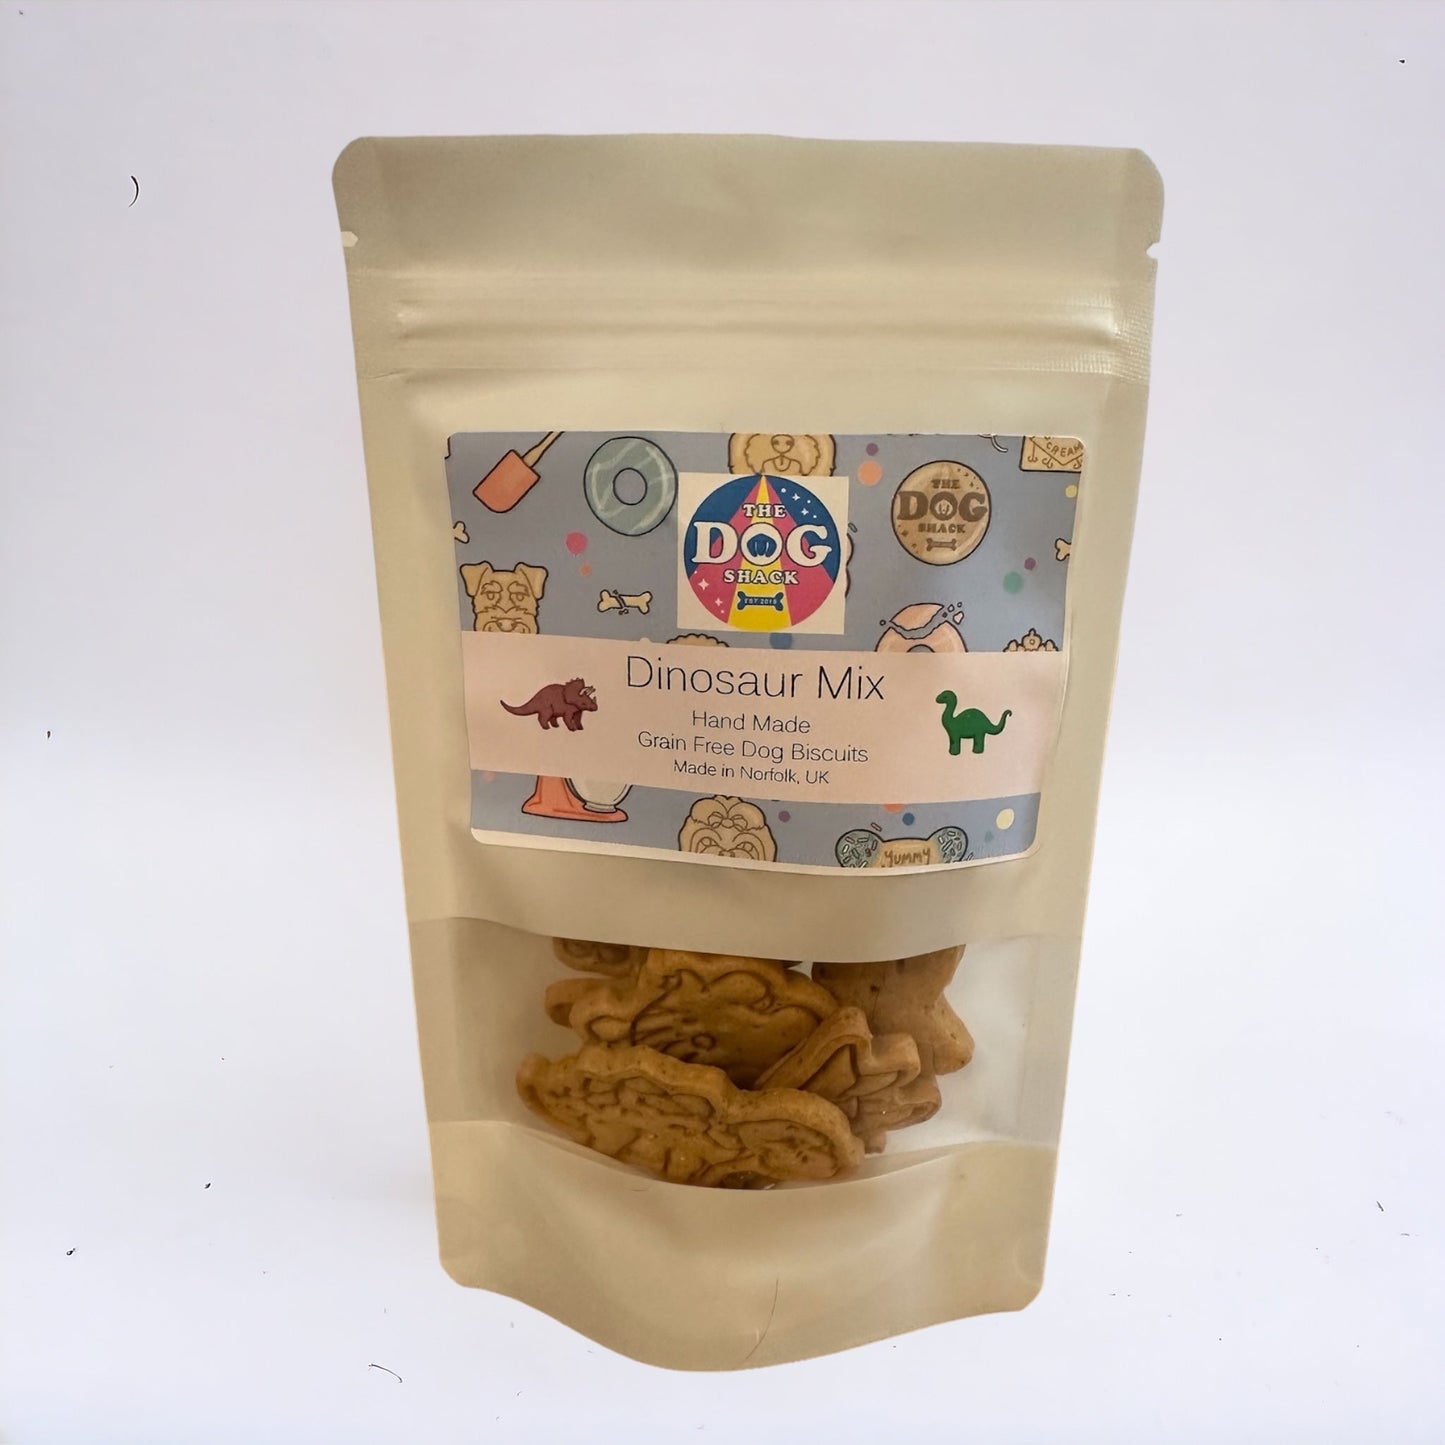 Dinosaur Mix Grain Free Dog Biscuits wholesale